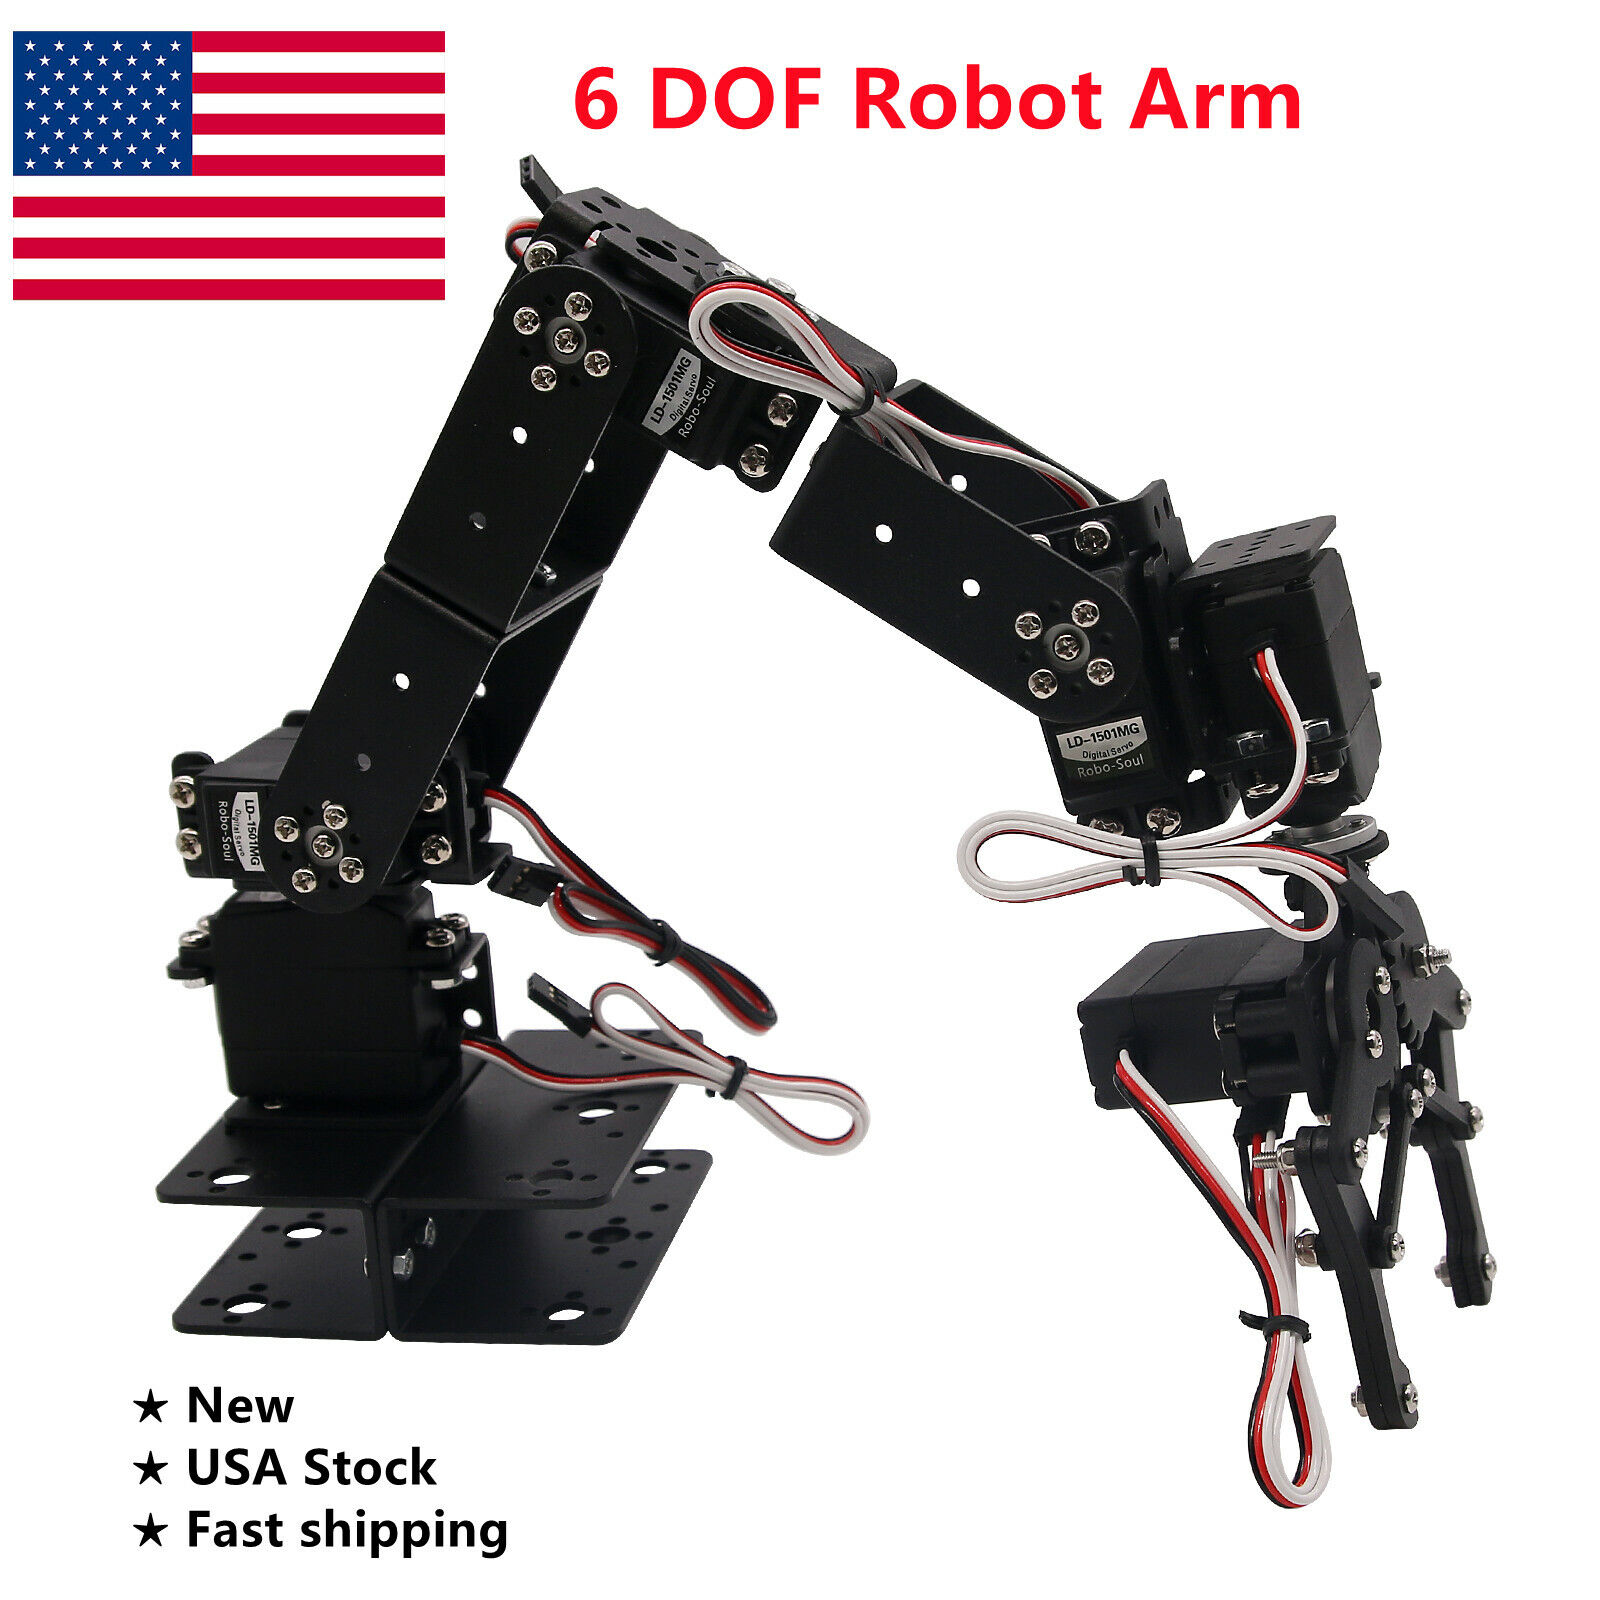 6 DOF Robot Arm Mechanical Robotic Arm Clamp Claw Mount Kit for DIY US